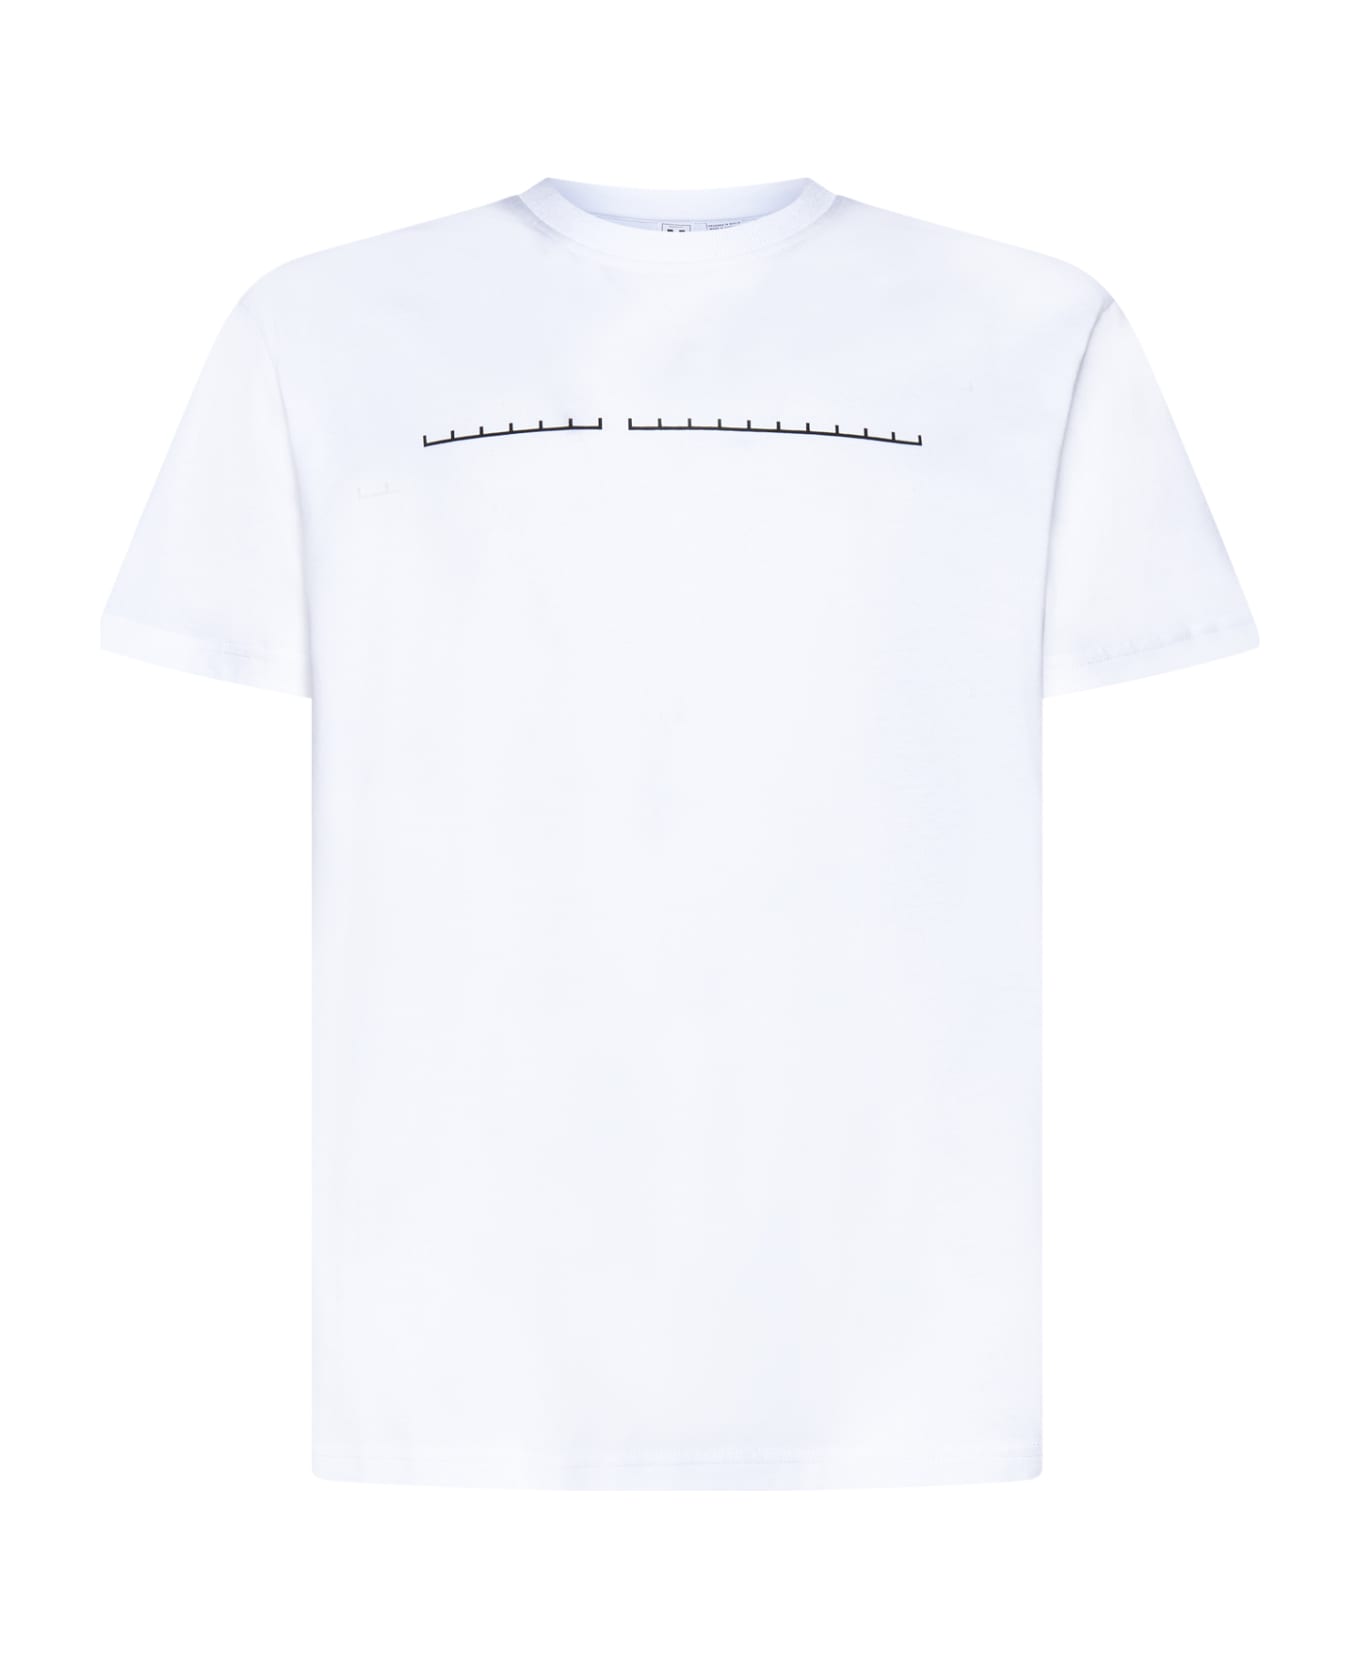 Random Identities T-Shirt - White logo シャツ